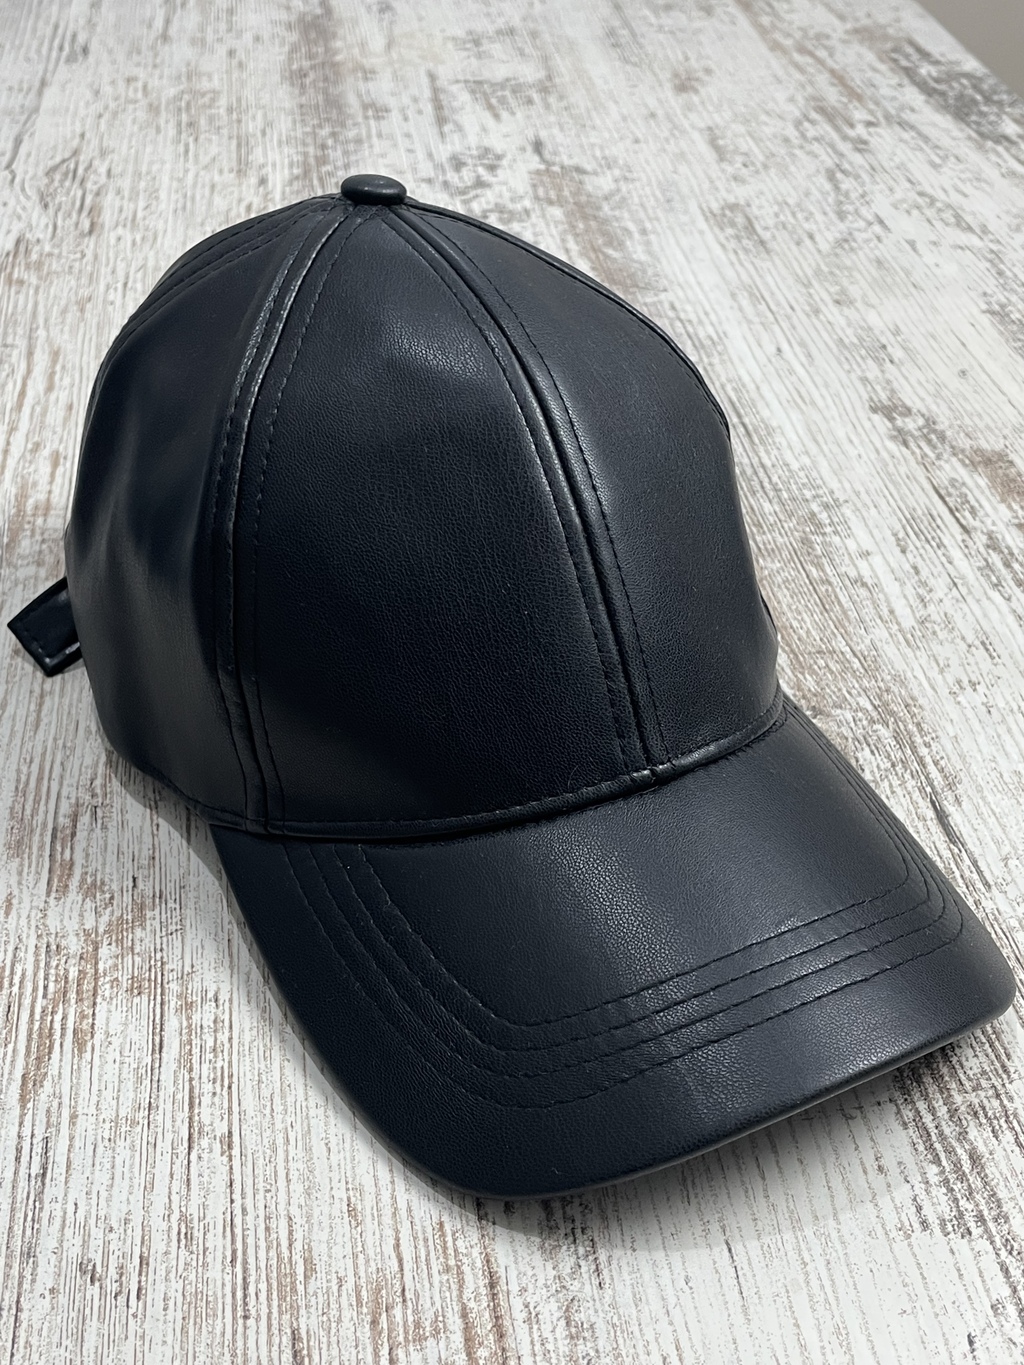 gorra negra hombre - Comprar en coco boutique